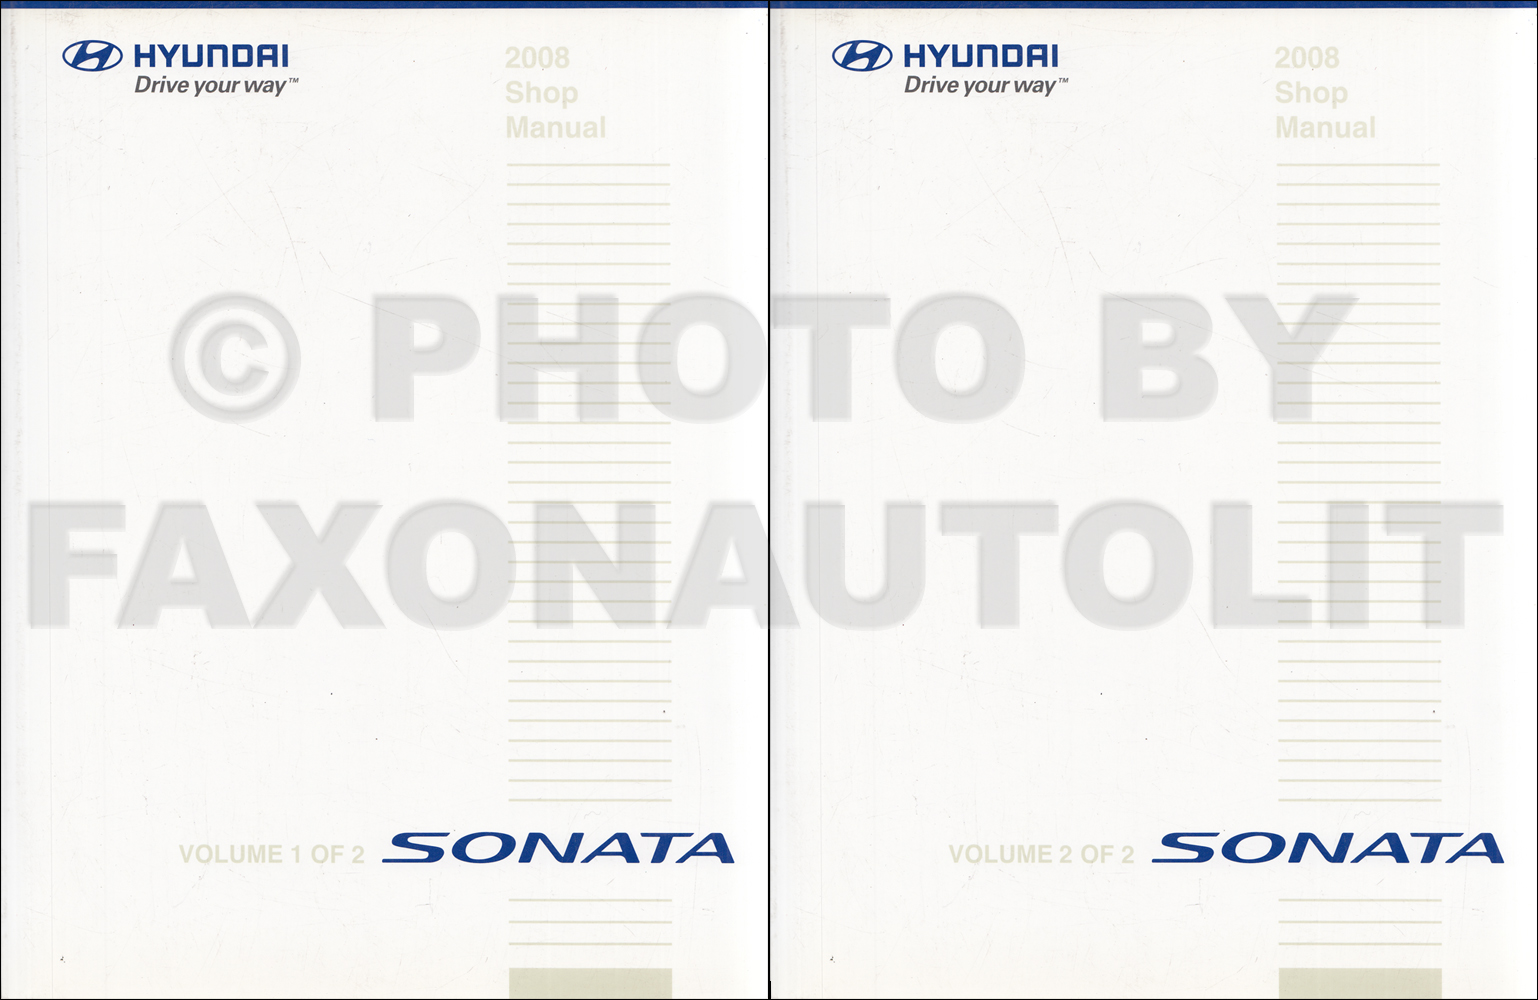 2007 Hyundai Sonata Shop Manual 2 Volume Set Original